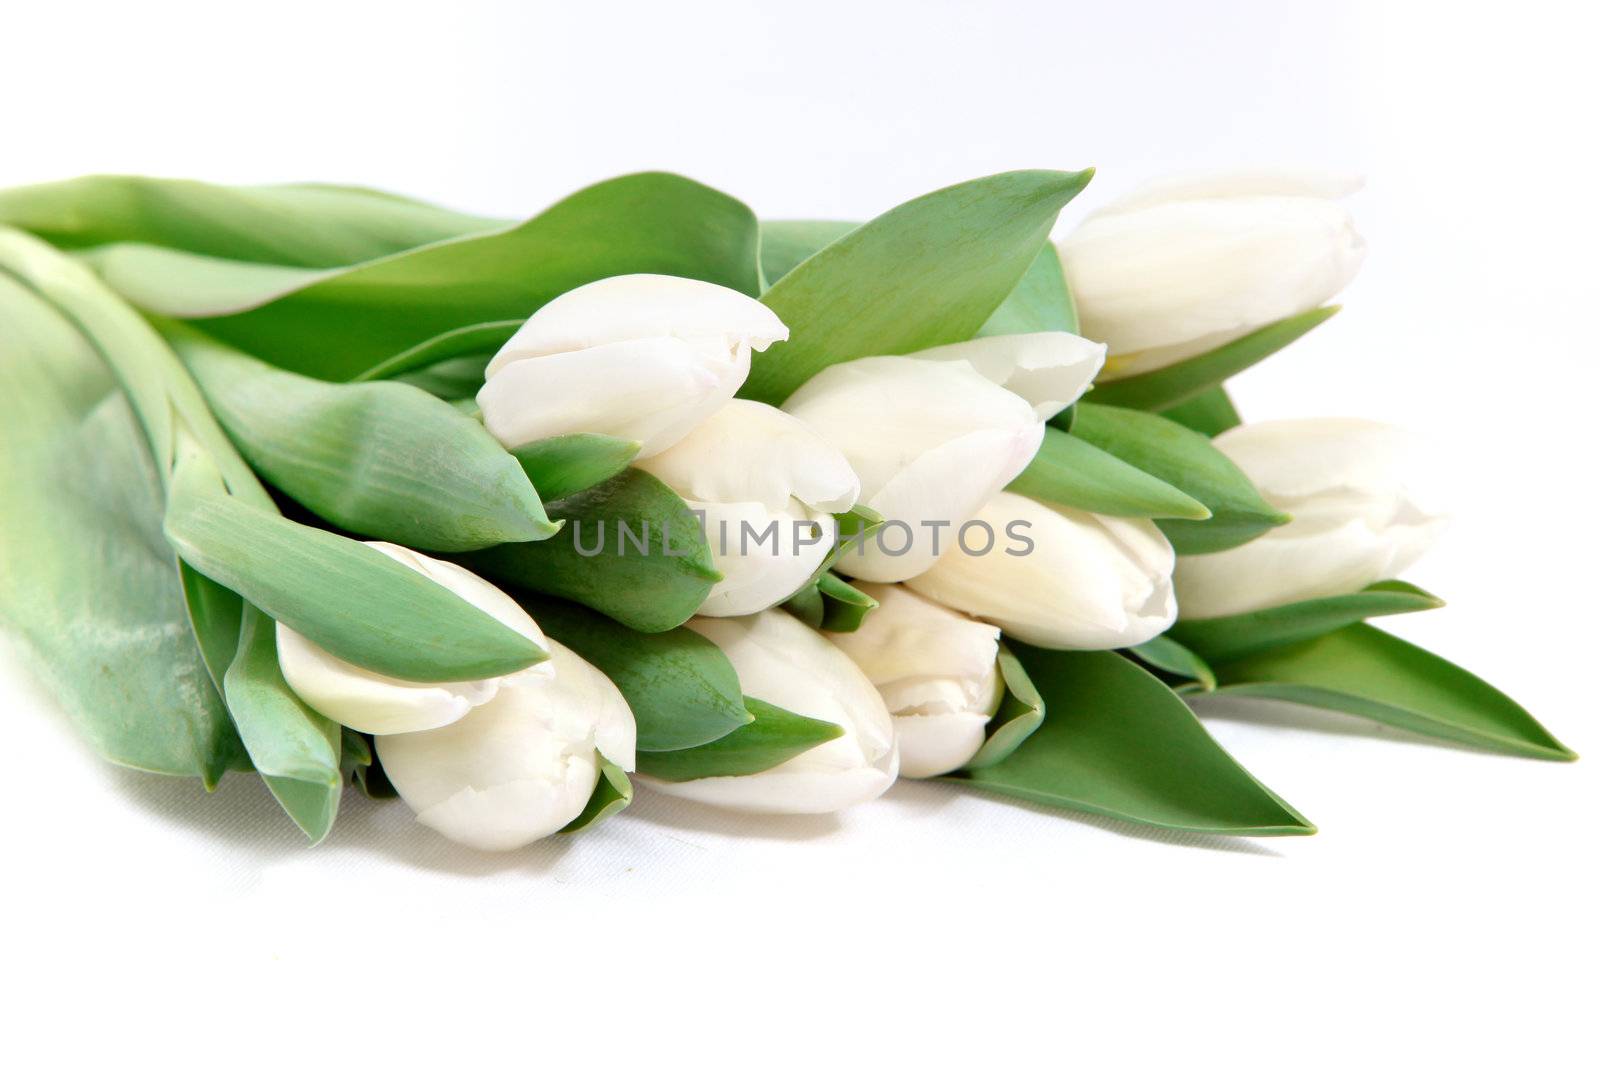 Bunch of fresh white tulips by Farina6000